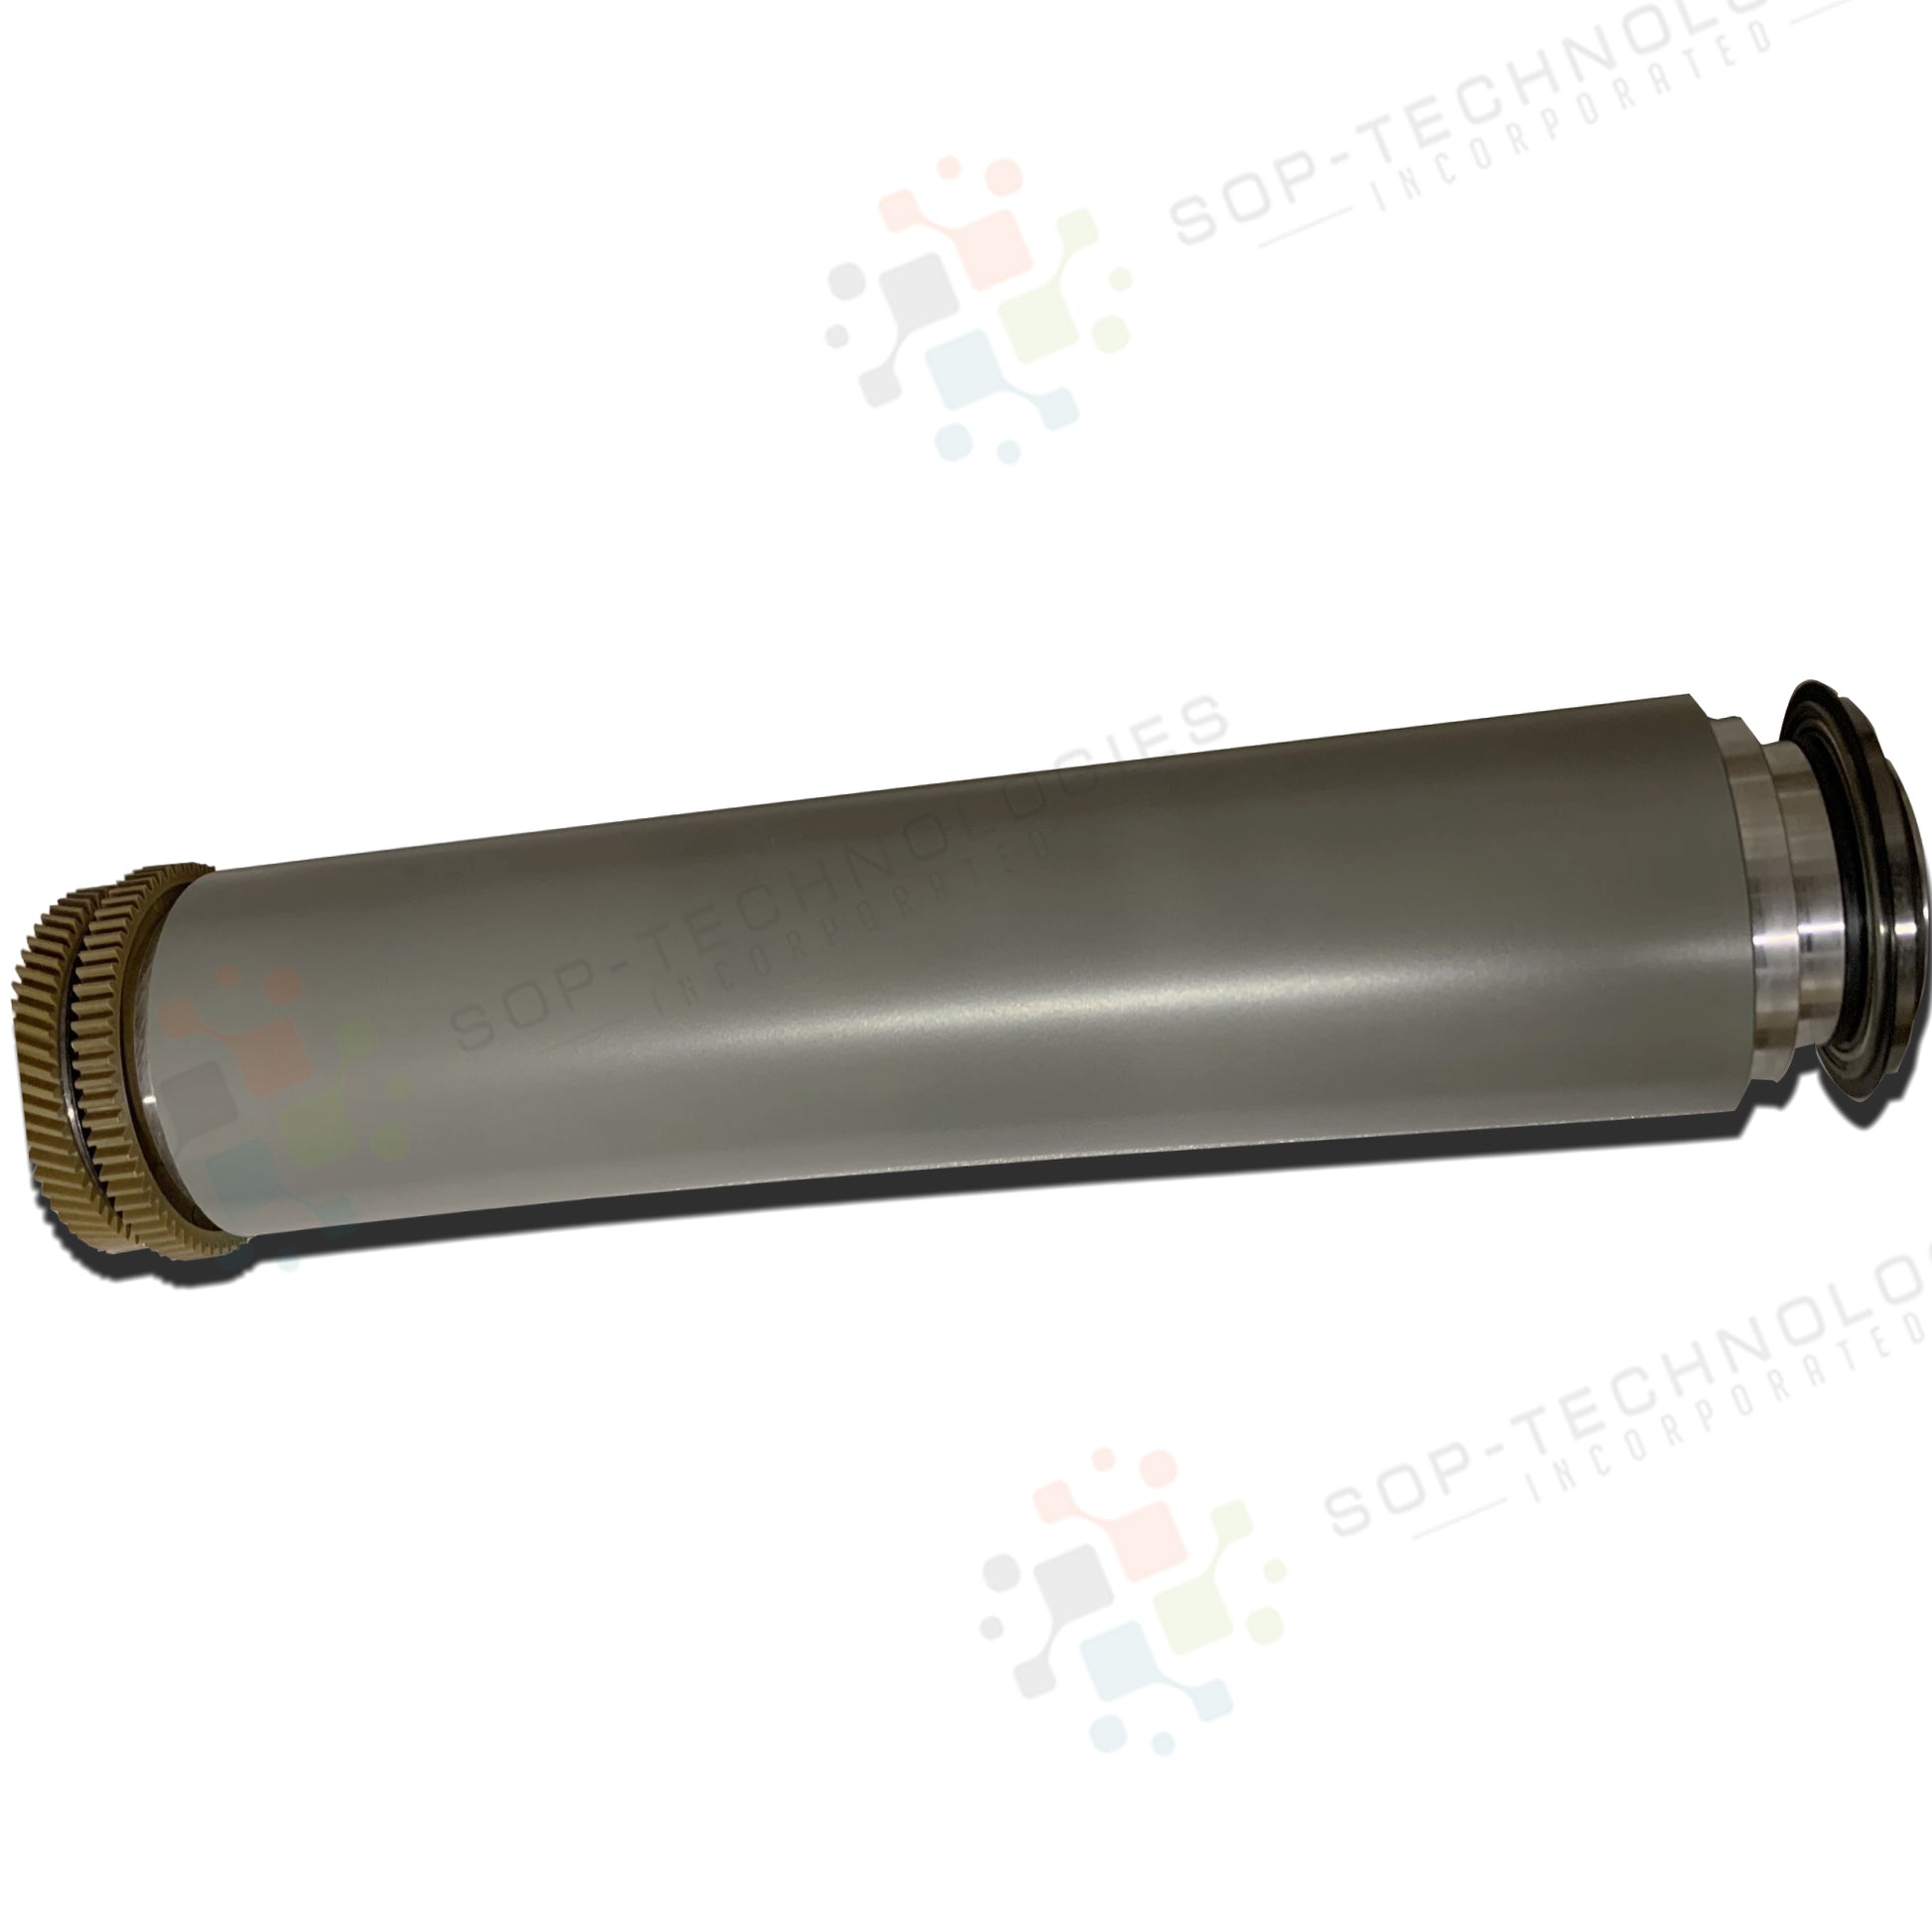 Upper Fuser roller for xerox 4110,4112,4127,D95 D110 D125 Heat Roller Kit - SOP-TECHNOLOGIES, INC.